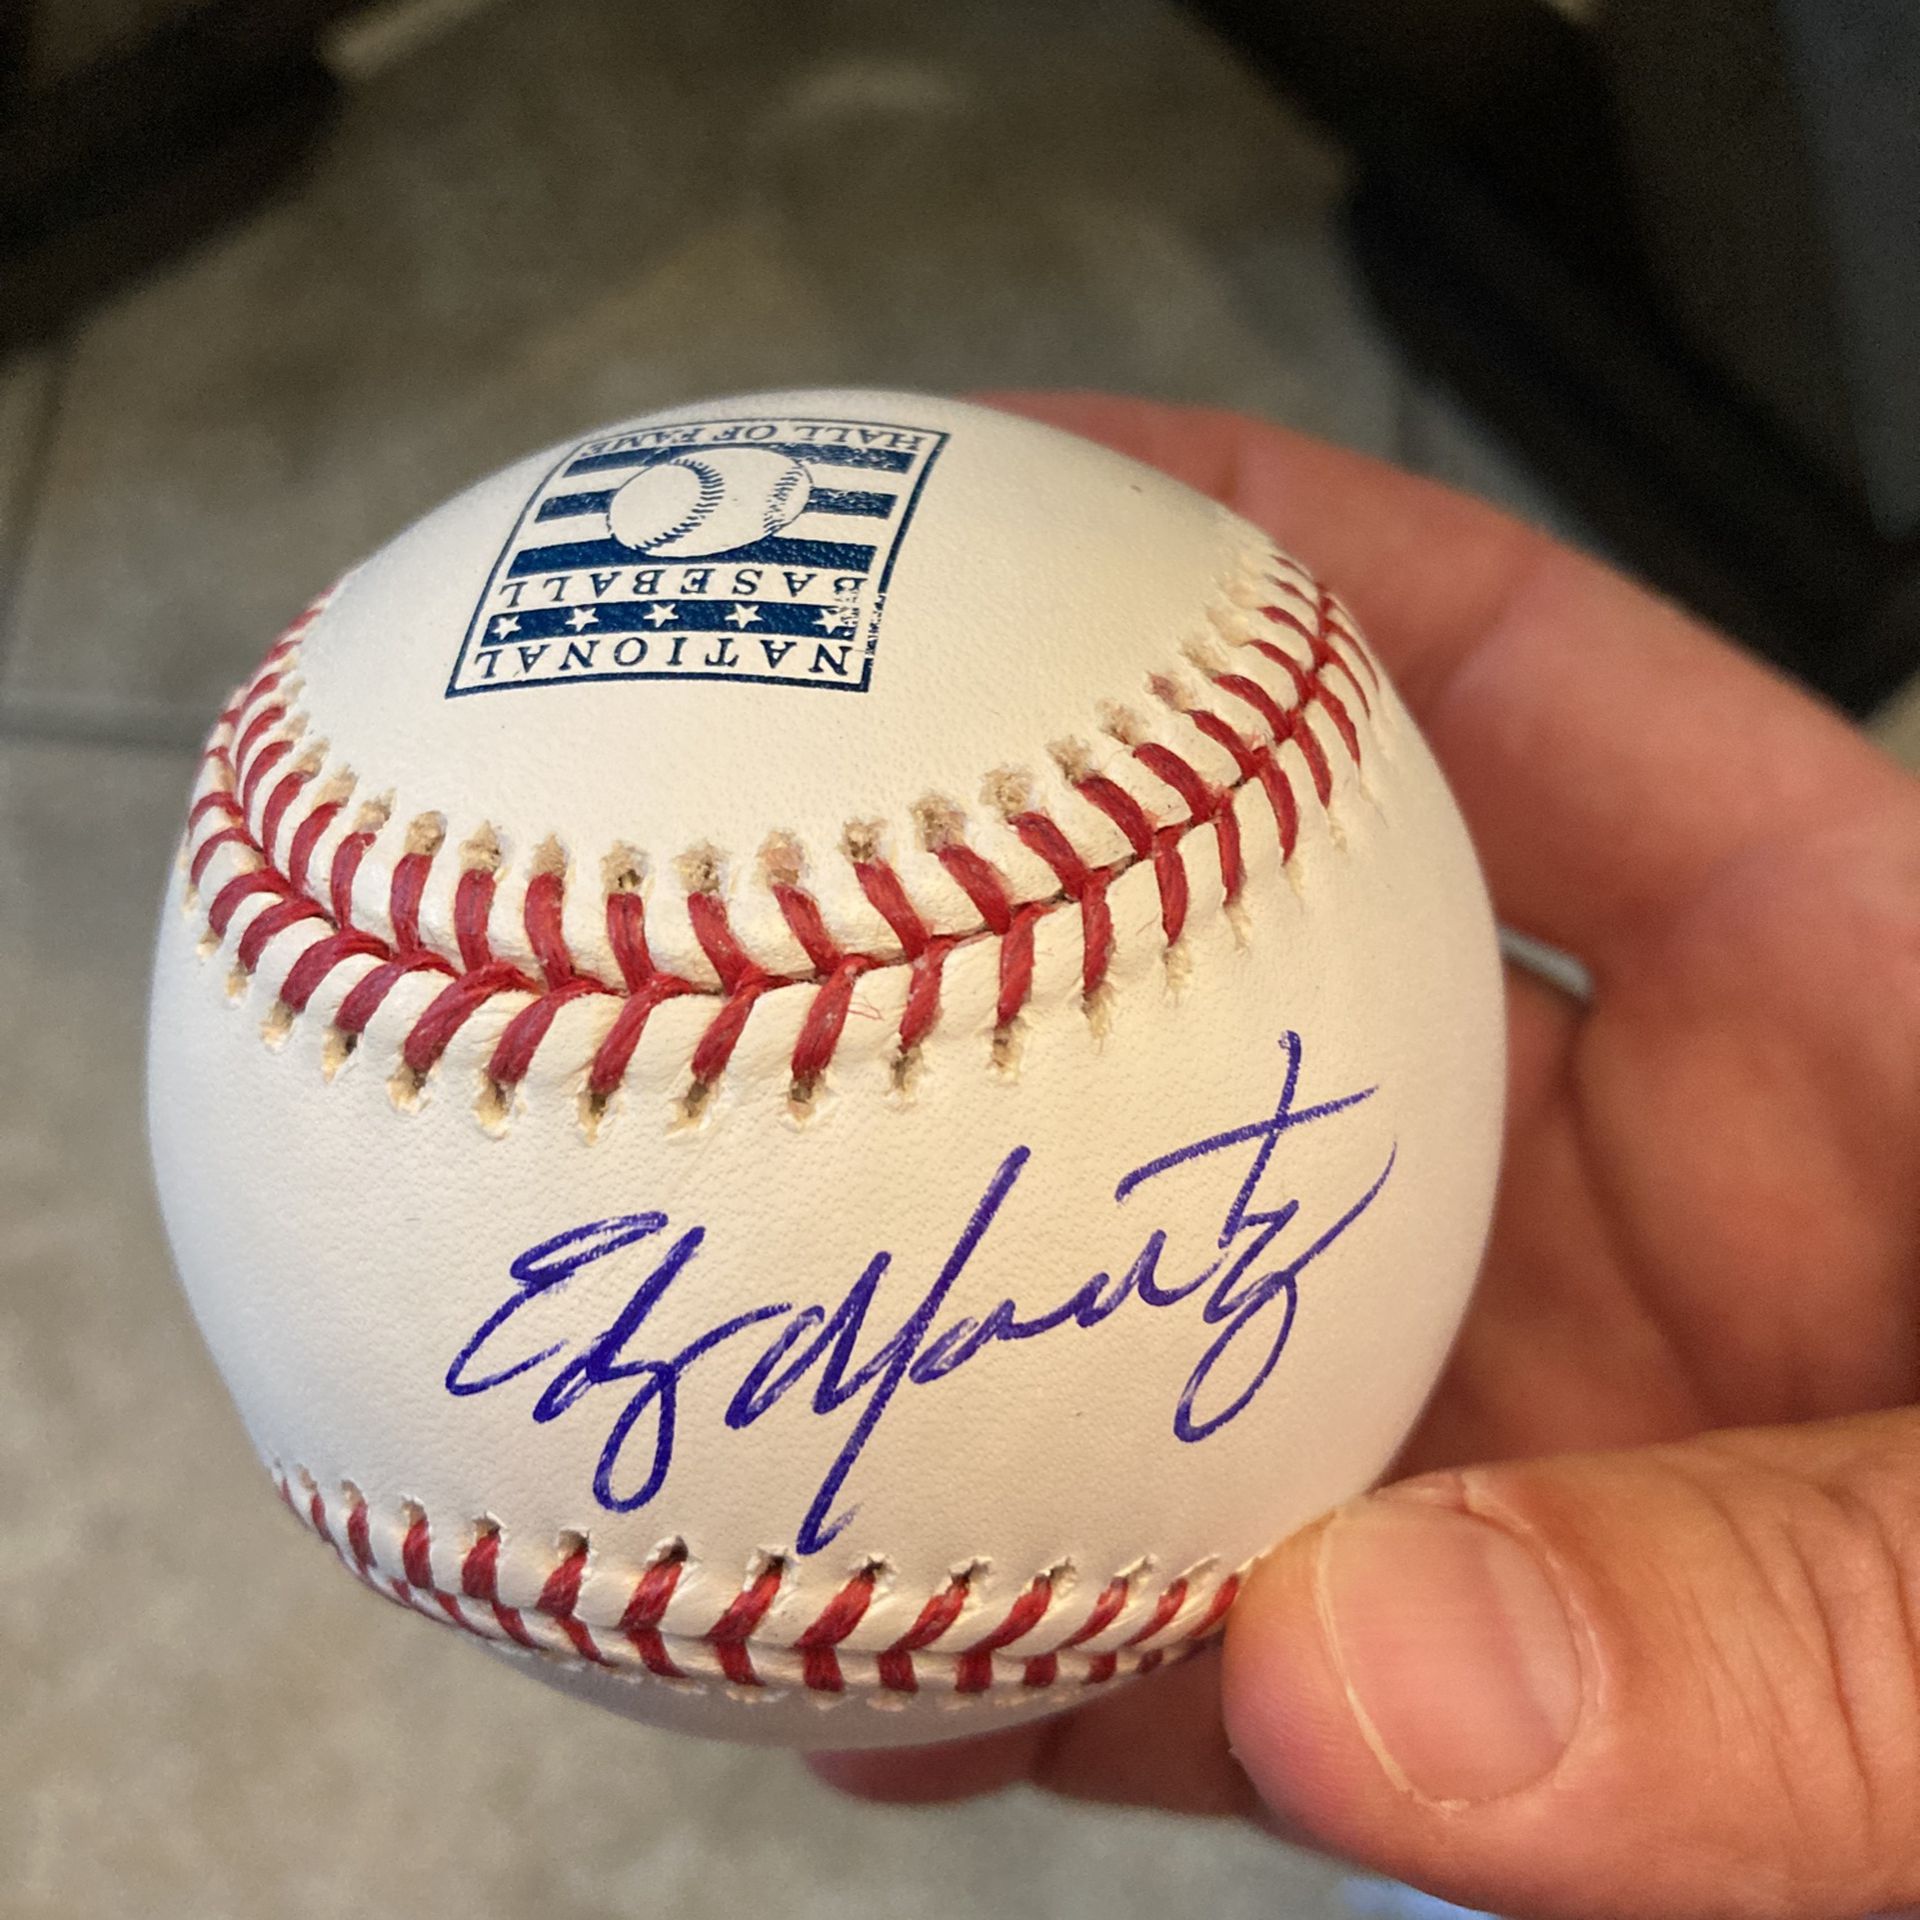 Edgar Martinez Autographed Baseball for Sale in Daytona Beach, FL - OfferUp